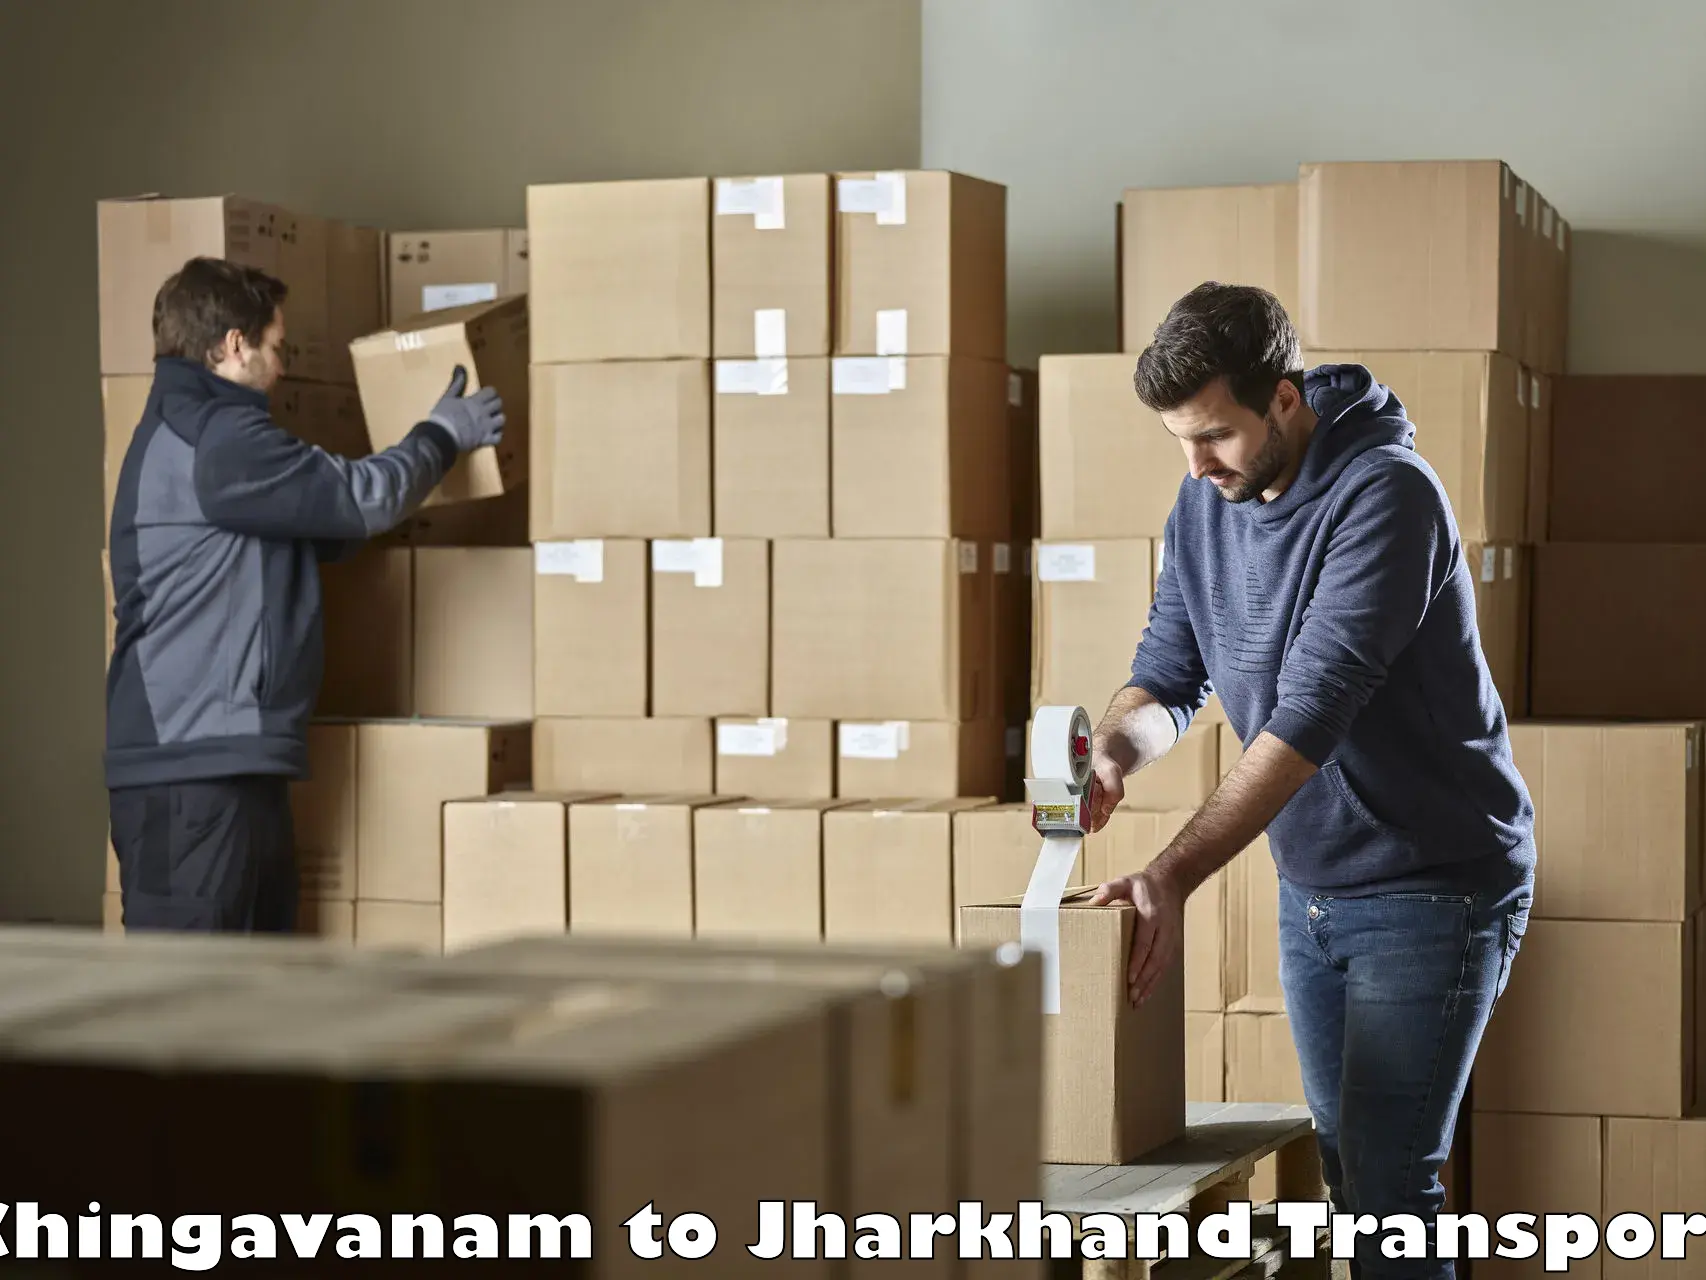 Truck transport companies in India Chingavanam to Domchanch